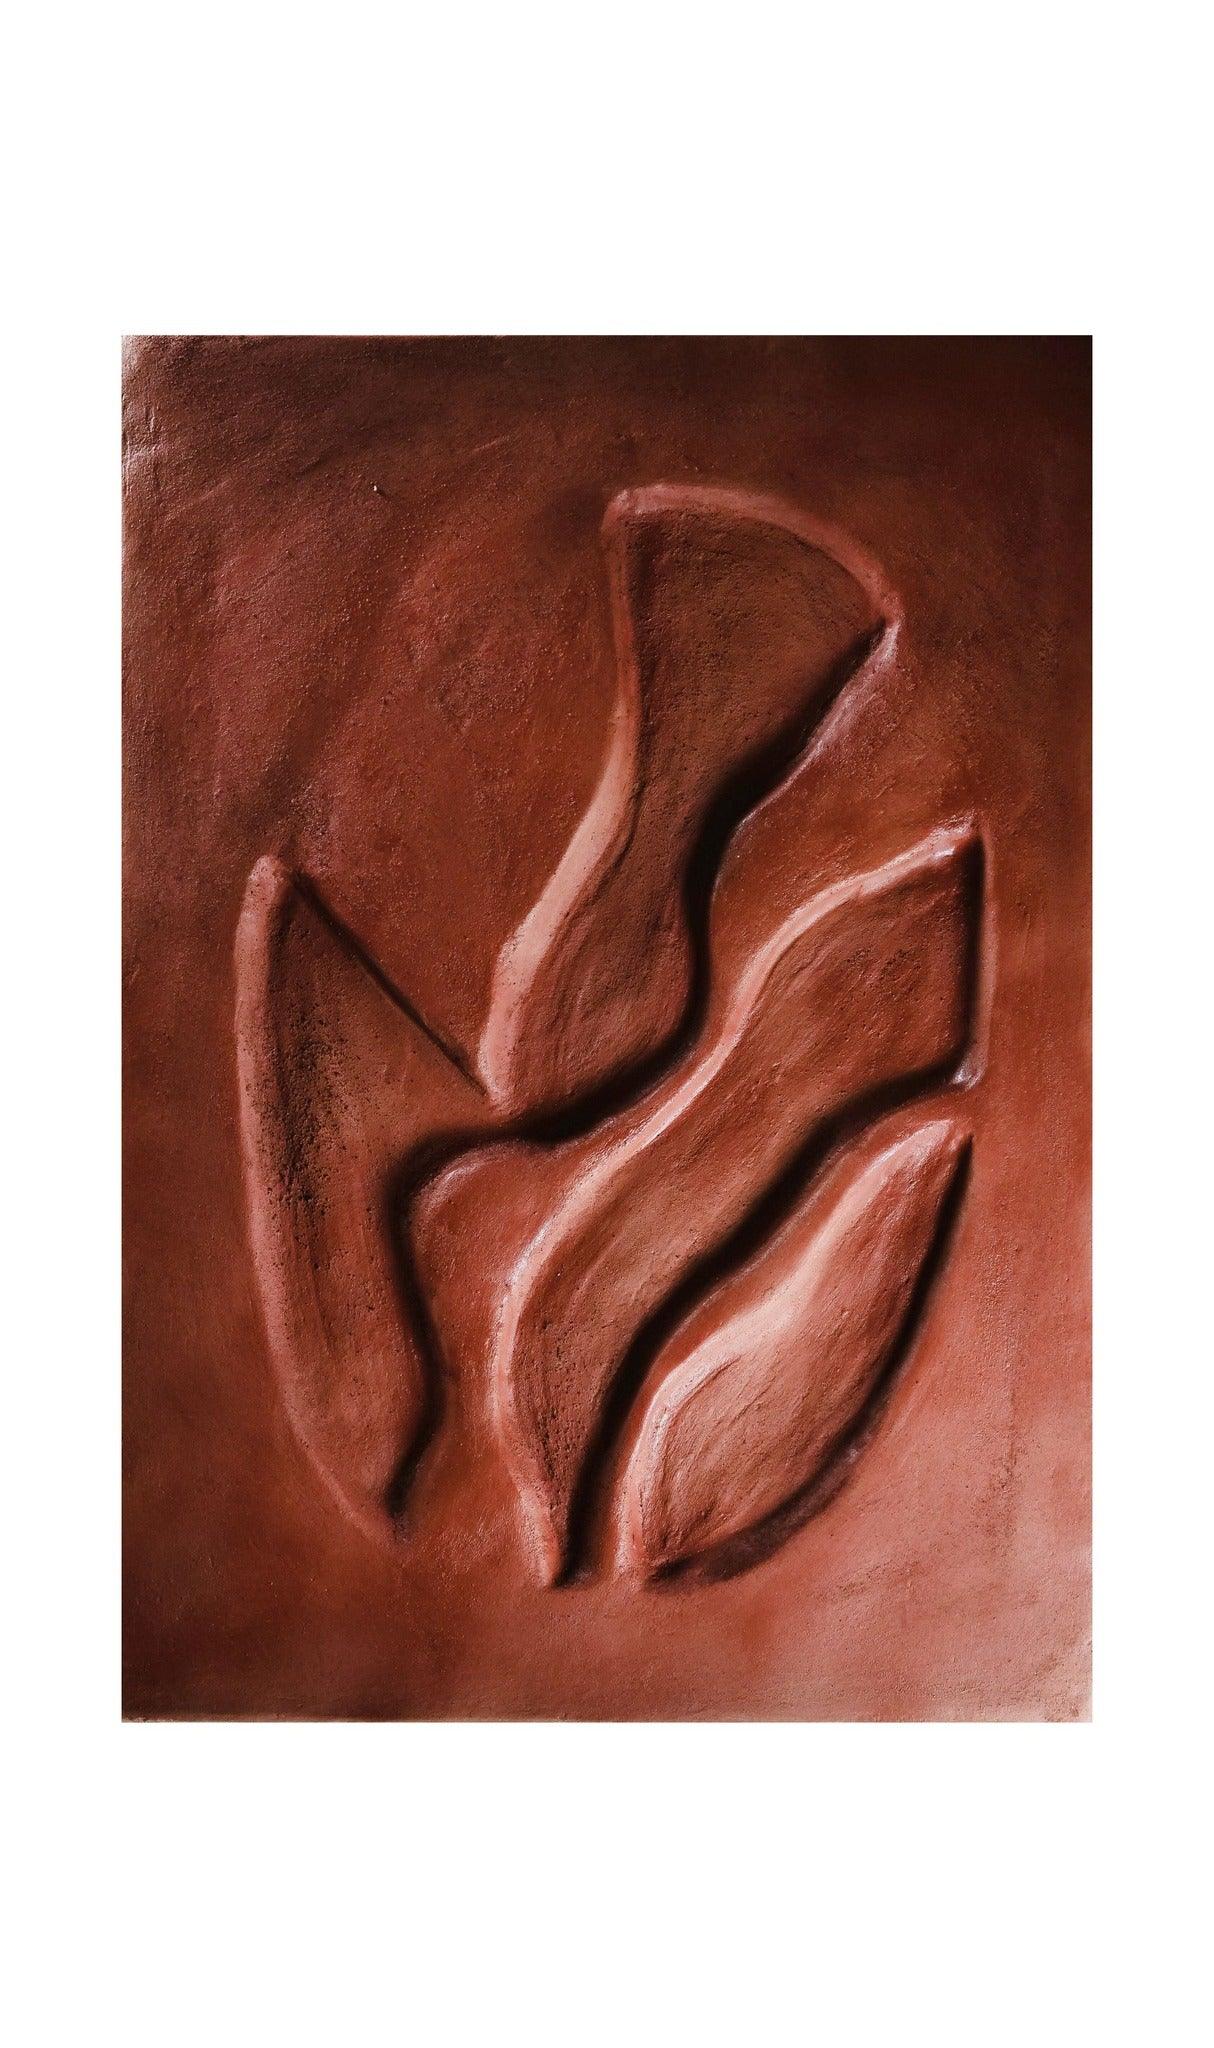 La terre seche, tablou sculptural, in relief, din ipsos și nisip. Atelier Lerevie - PARIS14A.RO